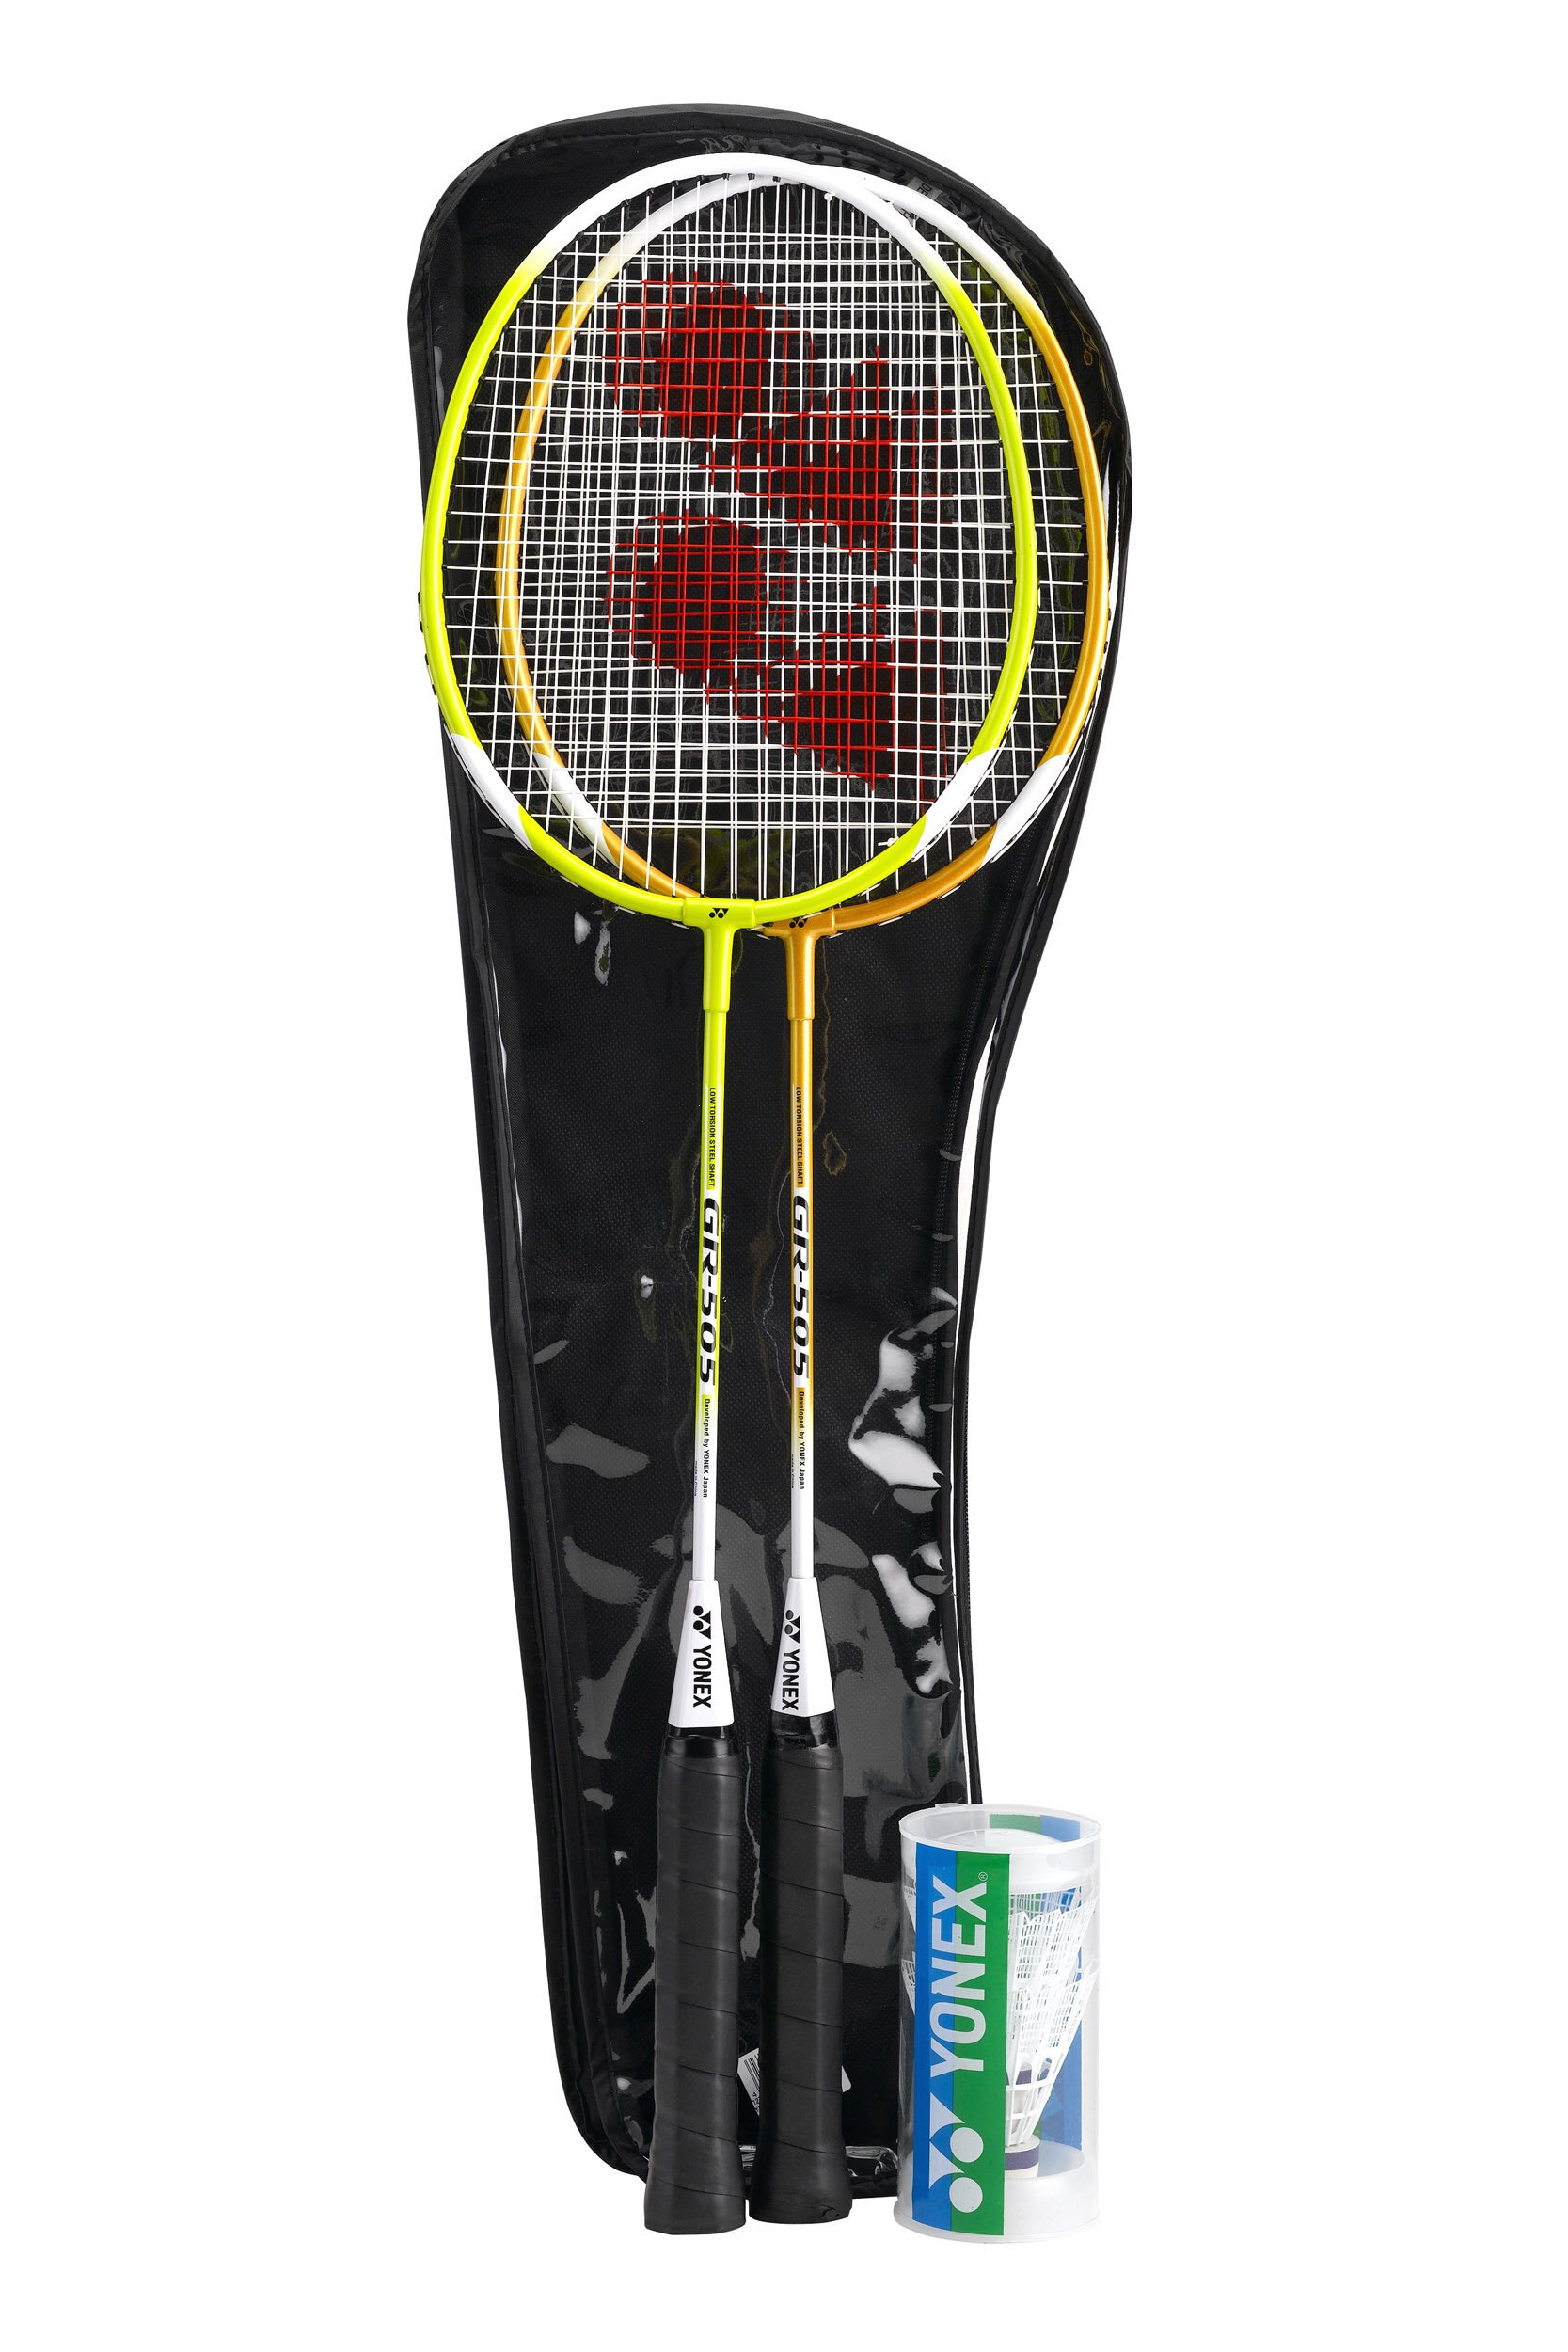 Yonex Badminton Set w 2 Racquets Bag Shuttlecocks - Buy Online - Ph 1800-370-766